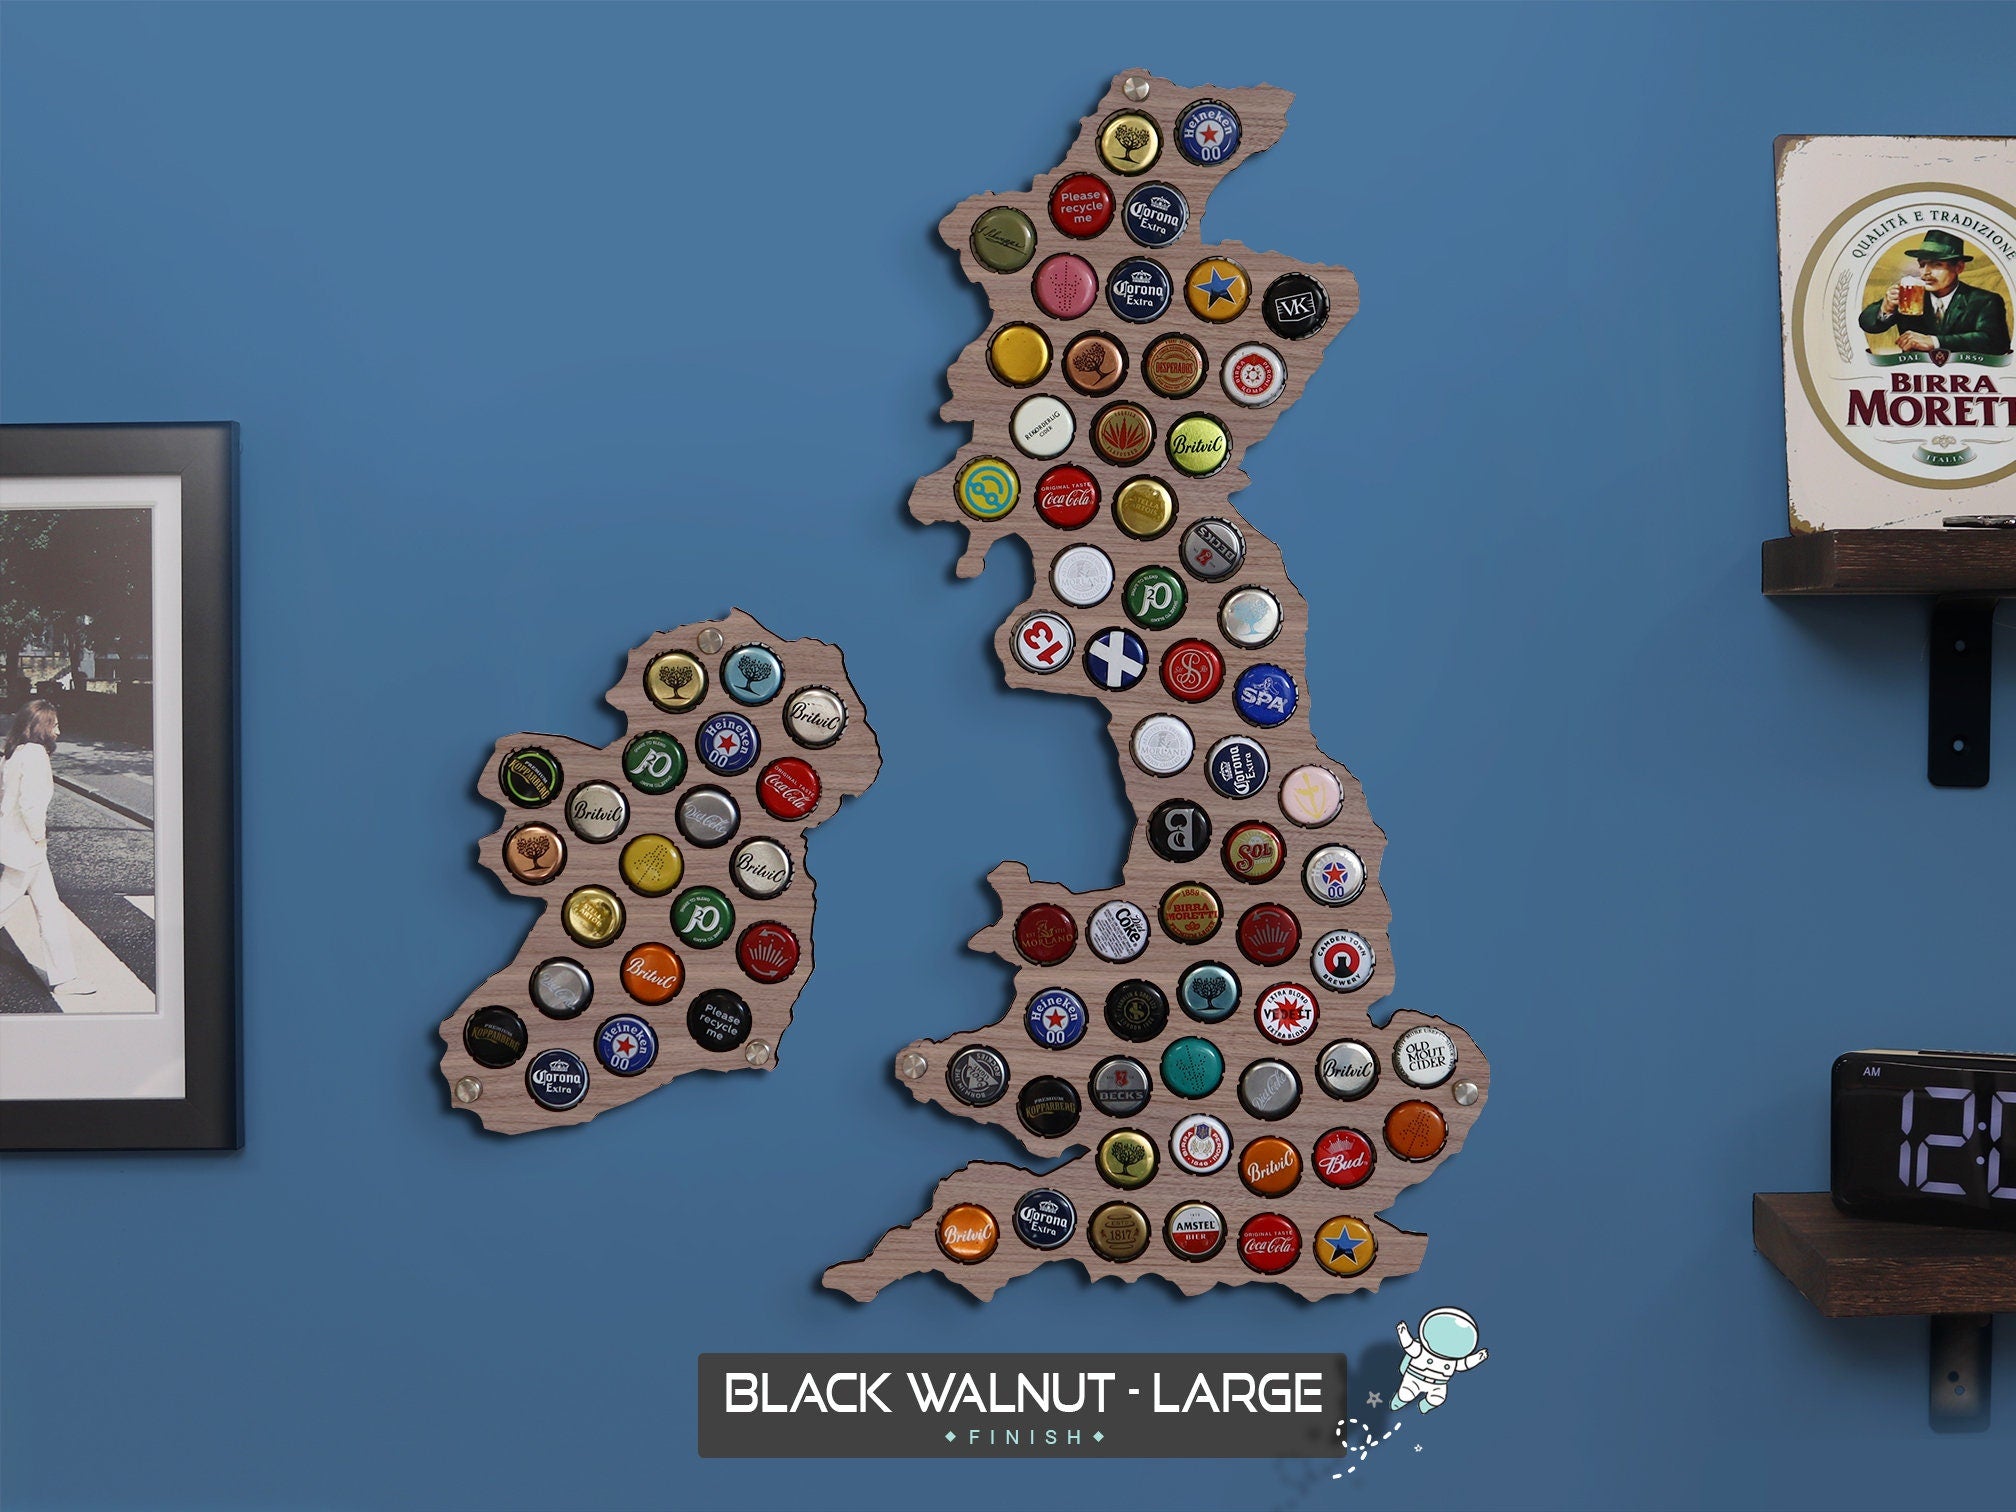 UK Beer Cap Map Holder - Displays up to 81 Bottle Tops